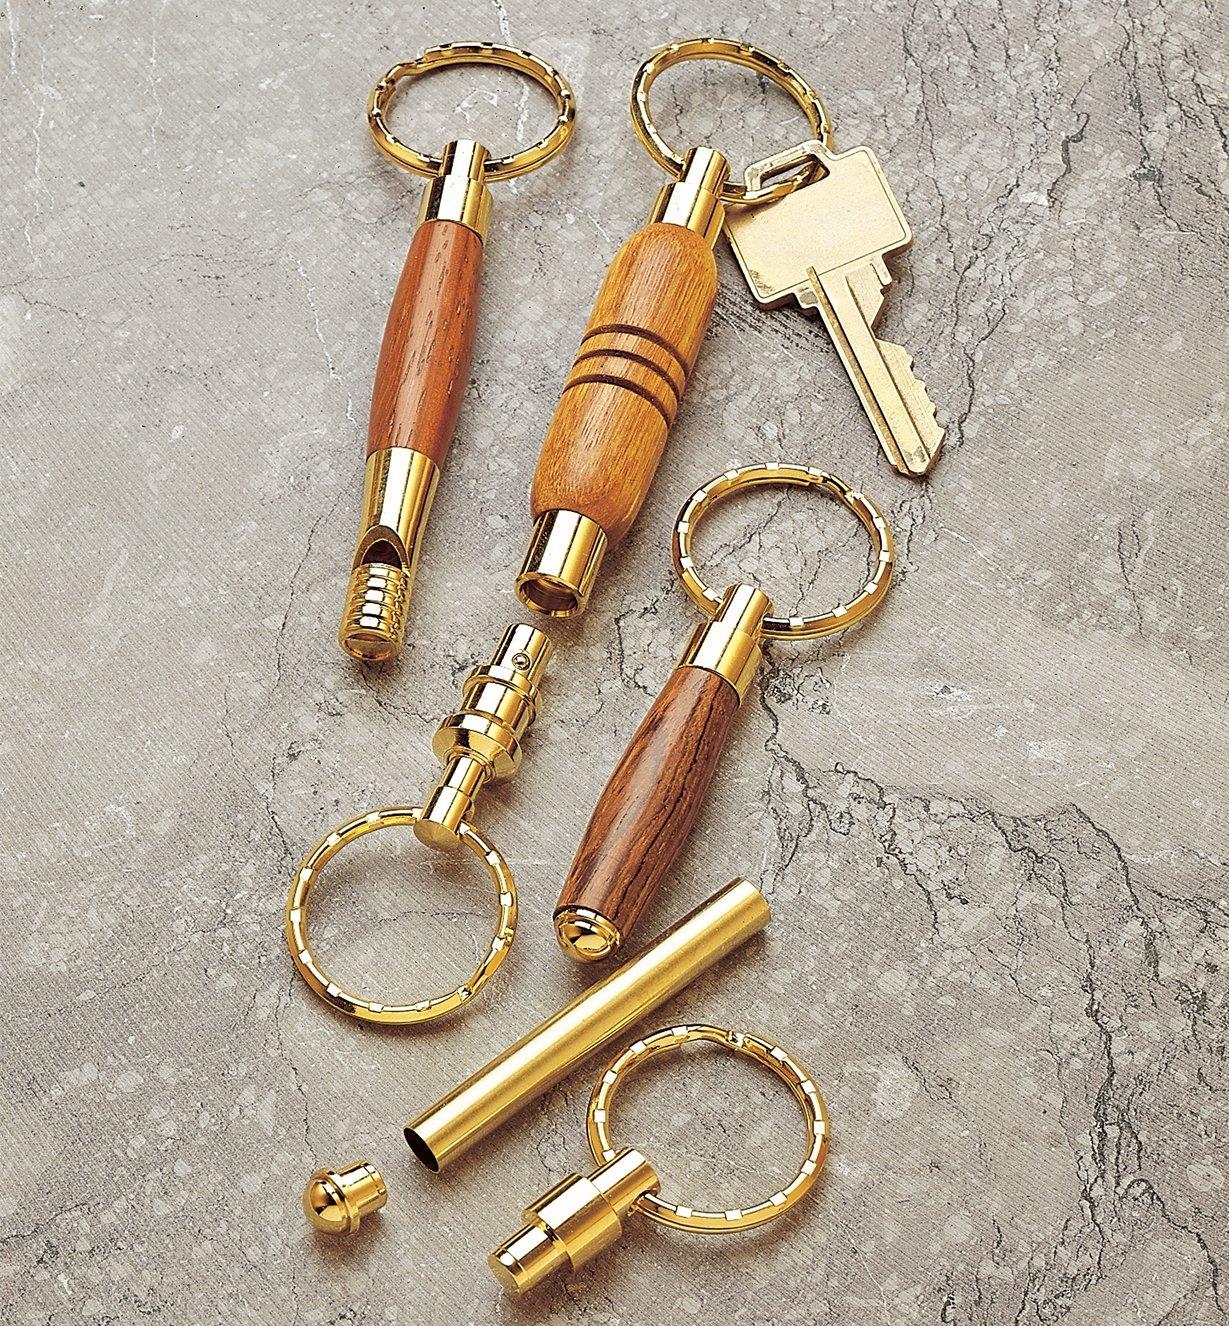 Key Ring Kits